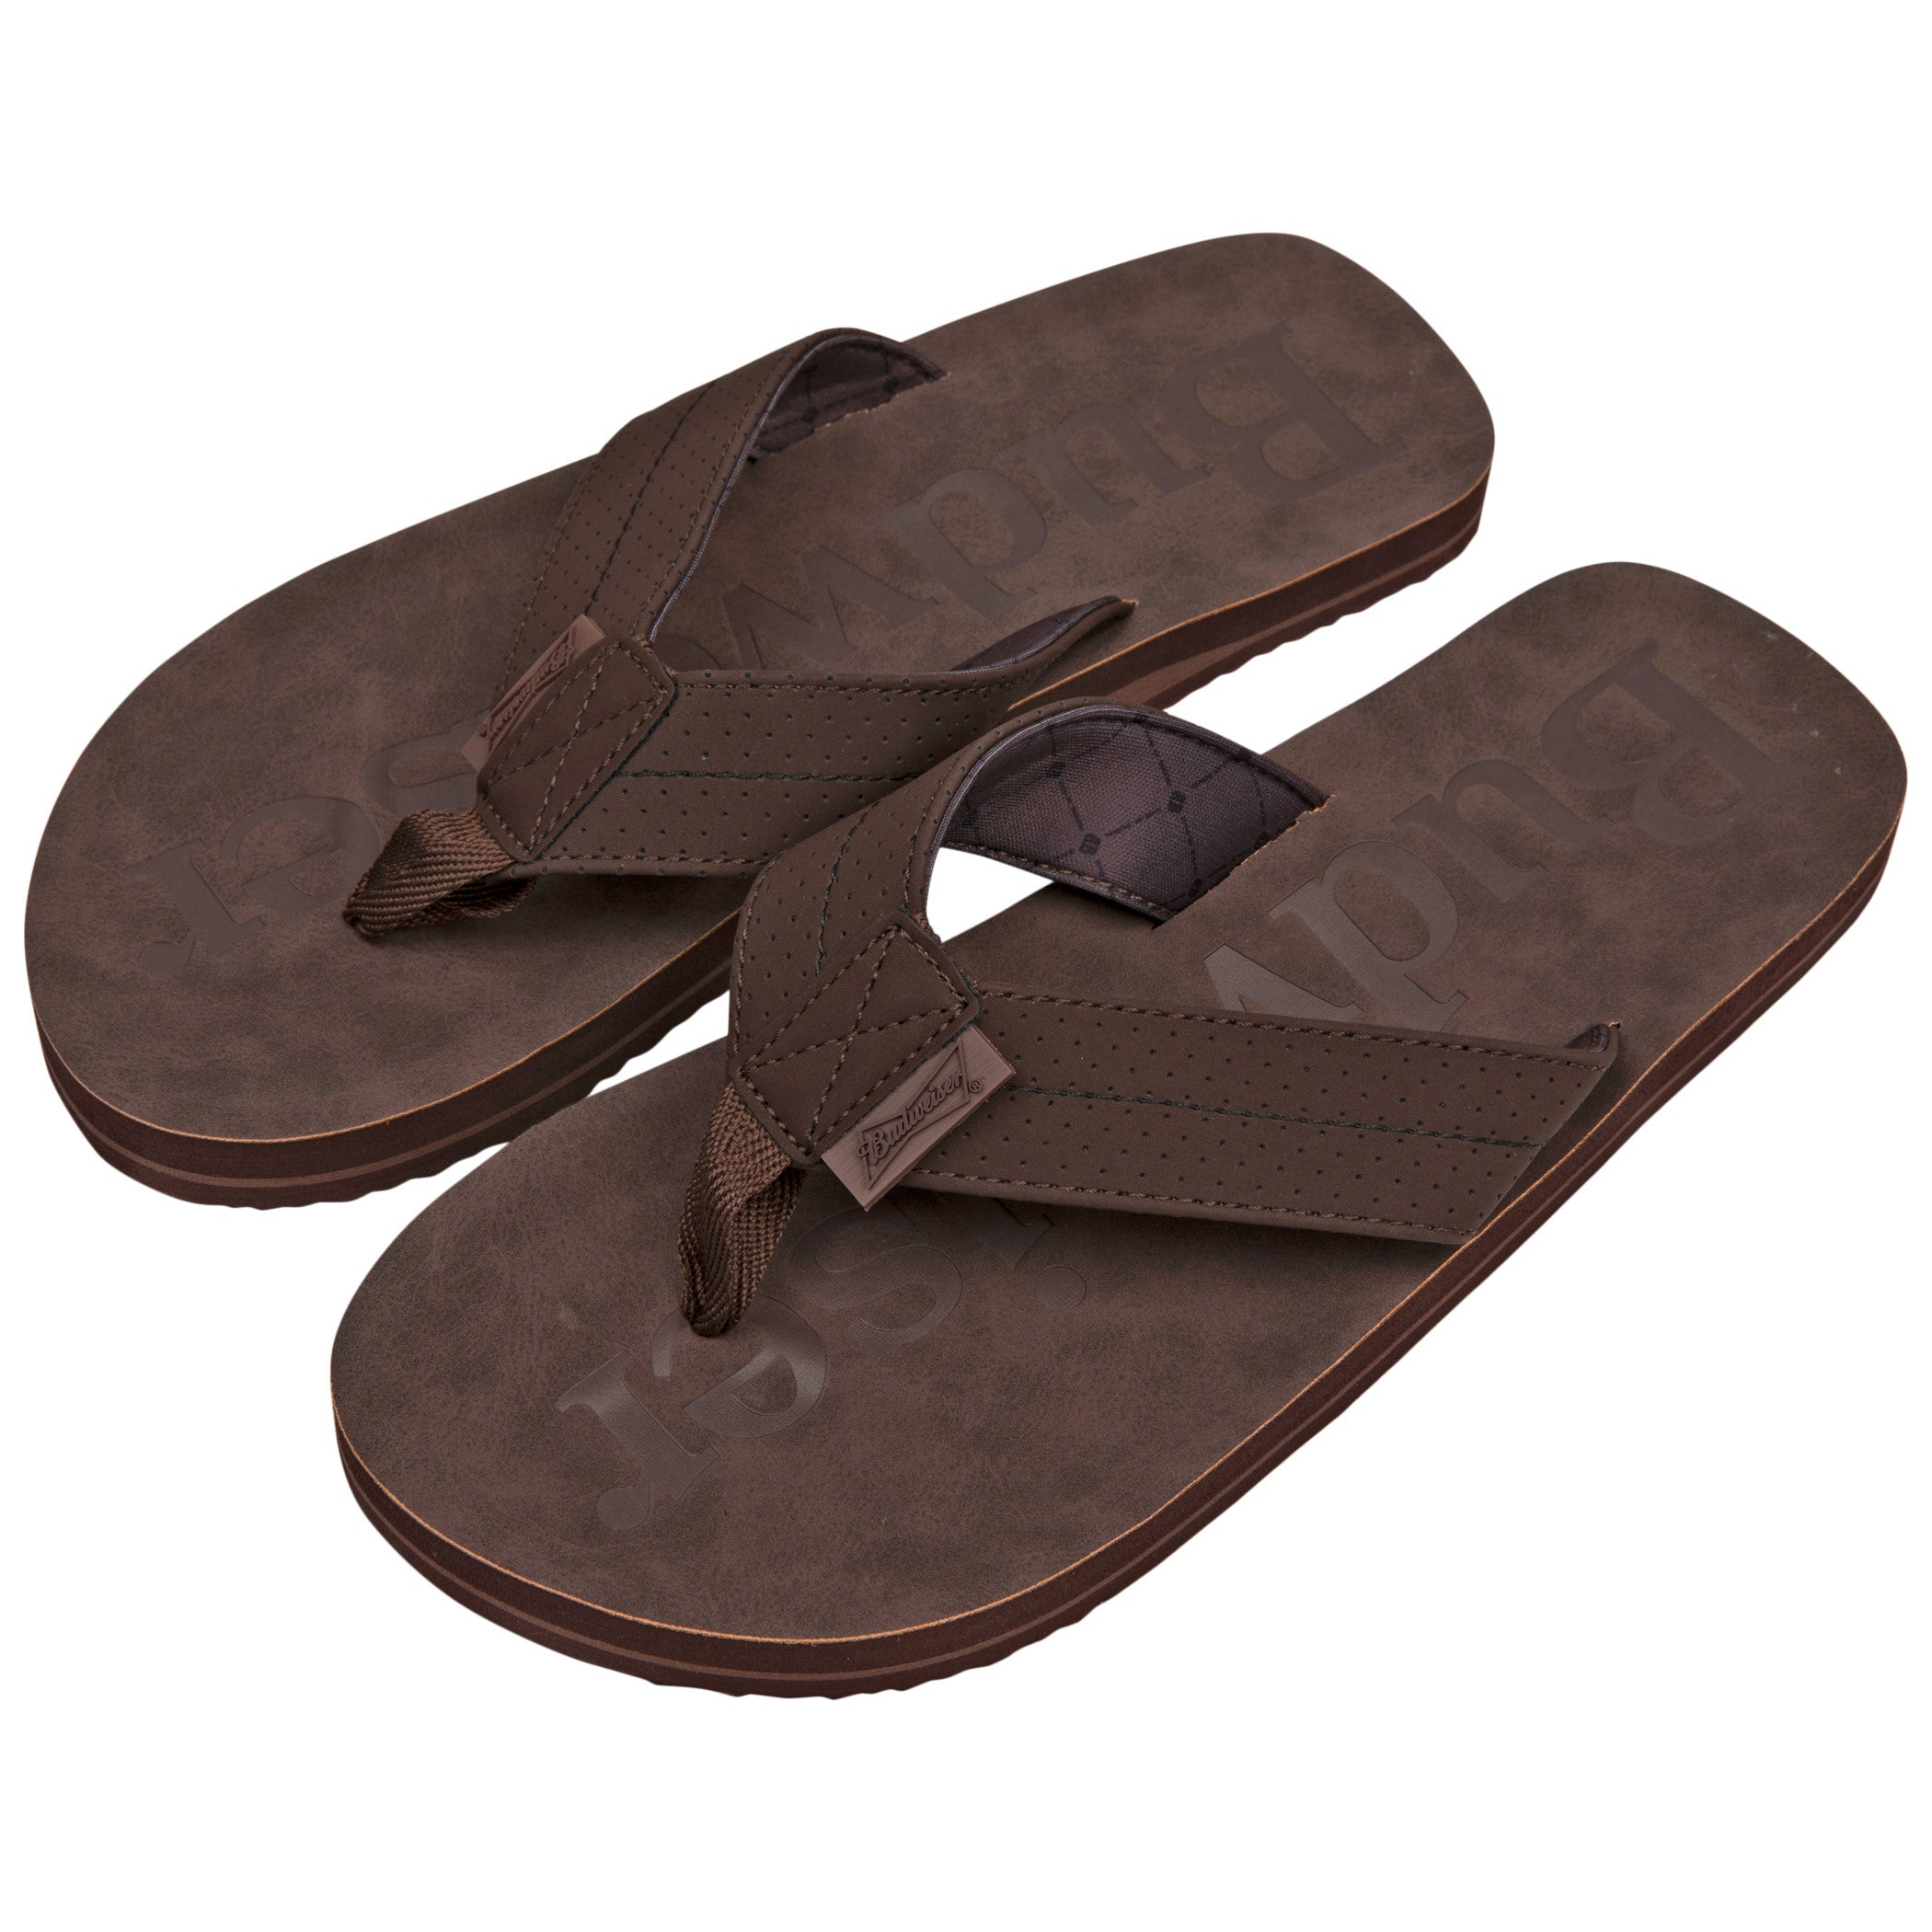 title:Budweiser Printed Brown Distressed Flip Flop Sandals;color:Brown